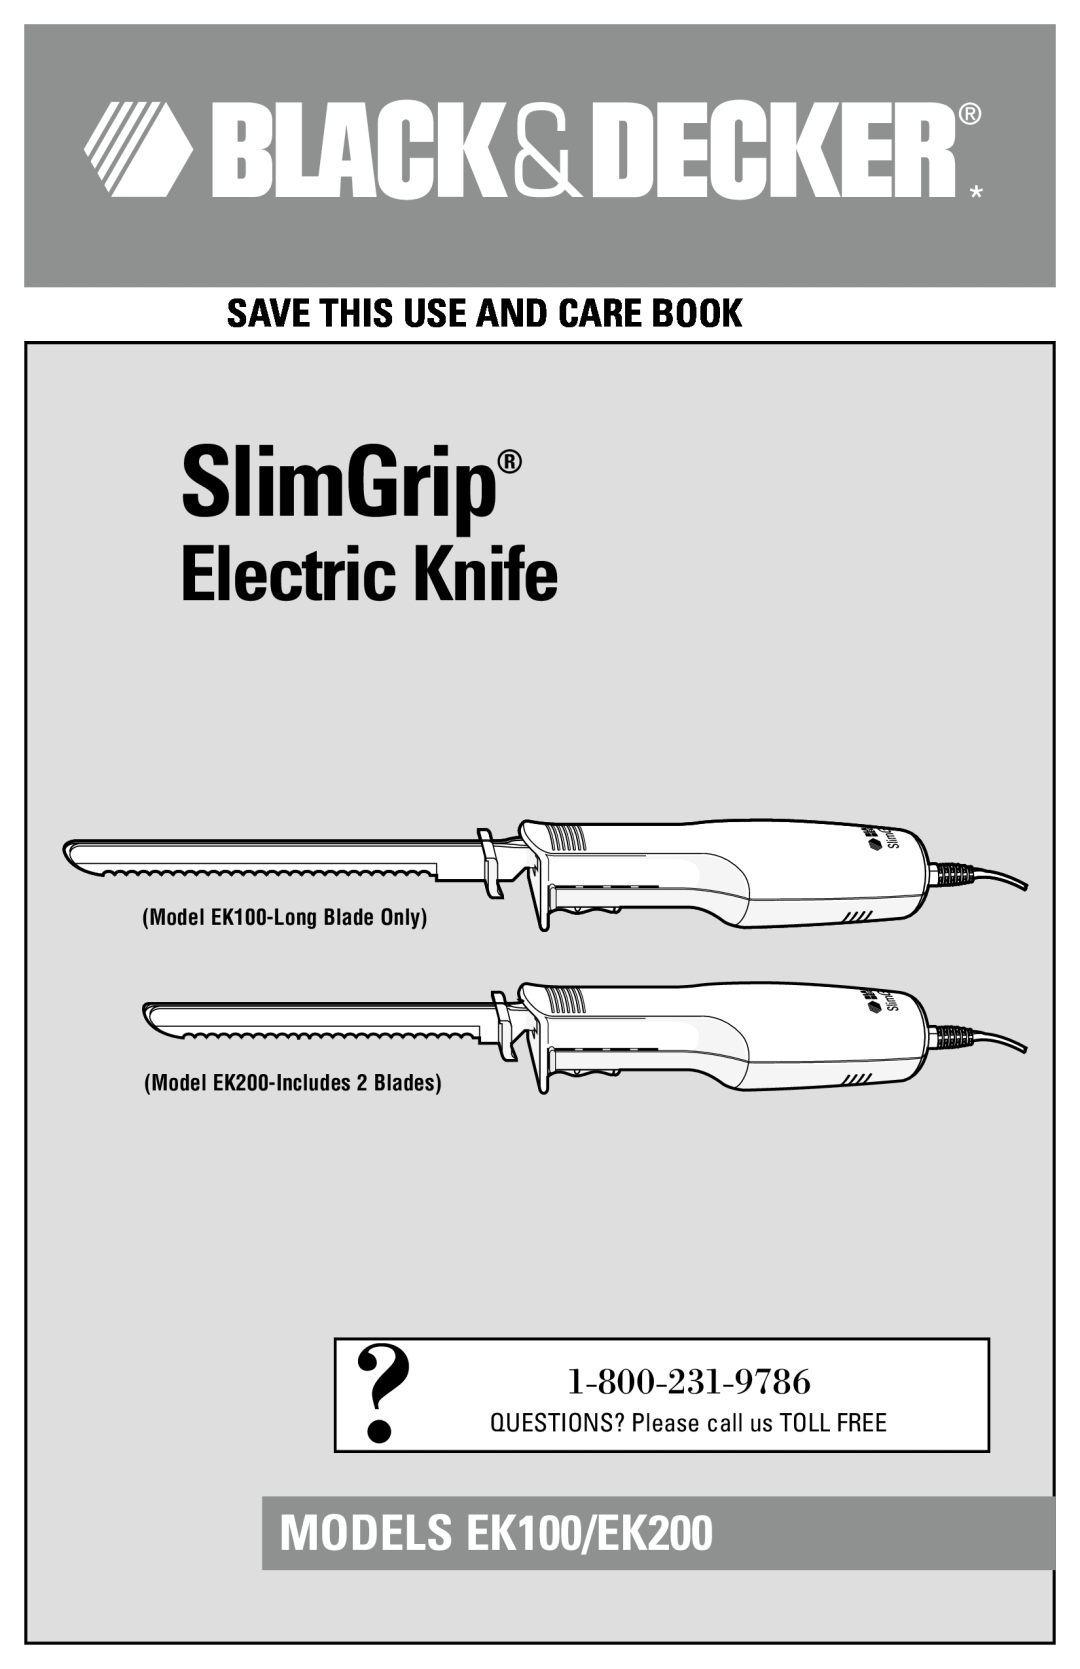 Black & Decker manual SlimGrip, Electric Knife, MODELS EK100/EK200, Save This Use And Care Book 